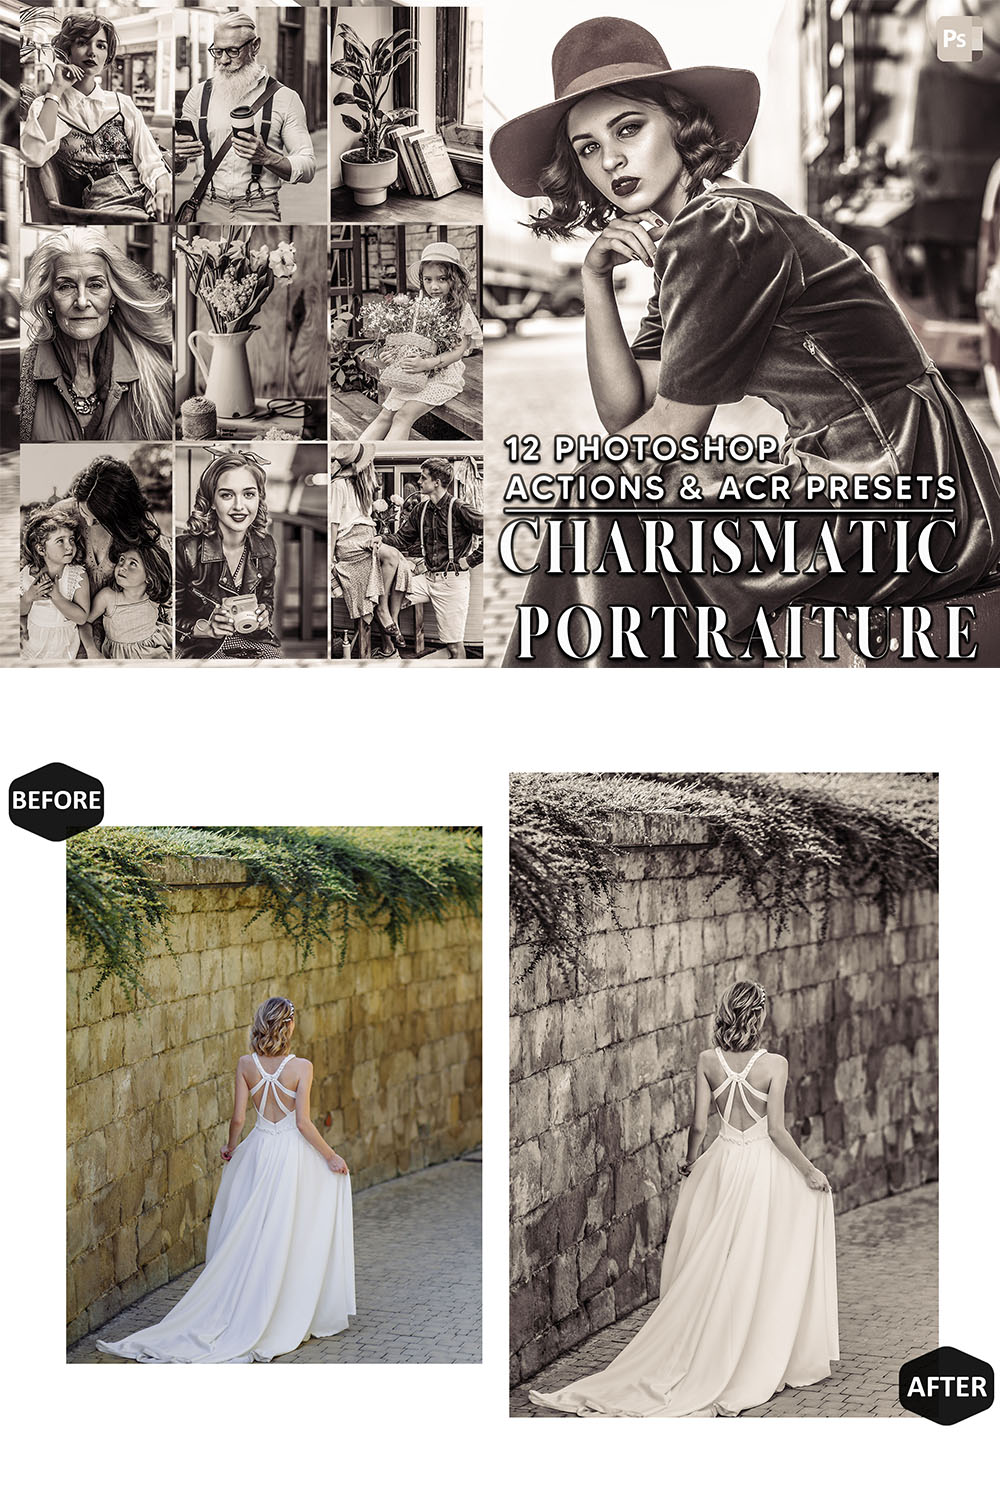 12 Photoshop Actions, Charismatic Portraiture Ps Action, Vintage ACR Preset, Sepia Ps Filter, Atn Portrait And Lifestyle Theme For Instagram, Blogger pinterest preview image.